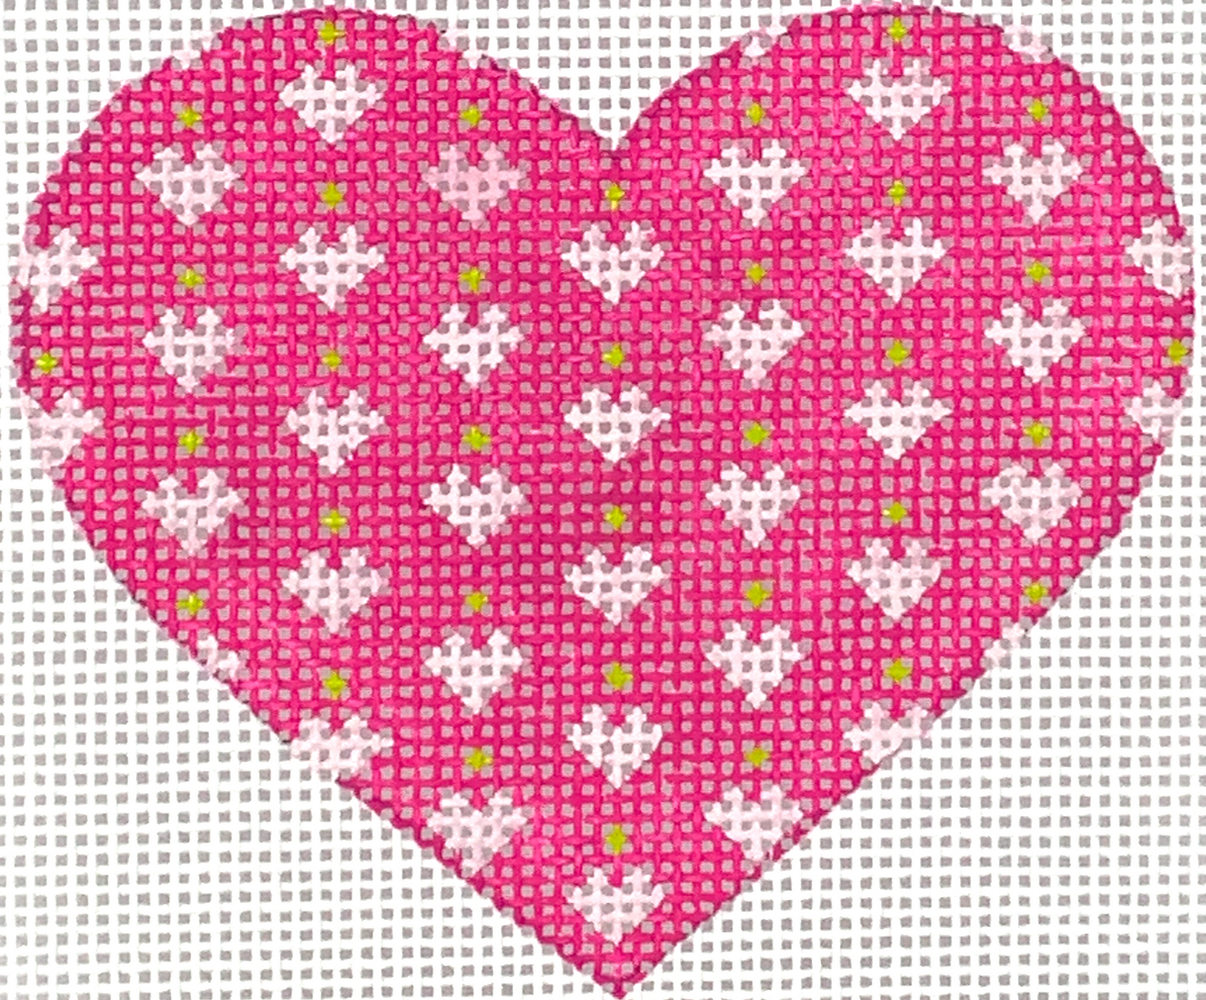 OM-274 Hearts on Pink Mini Heart